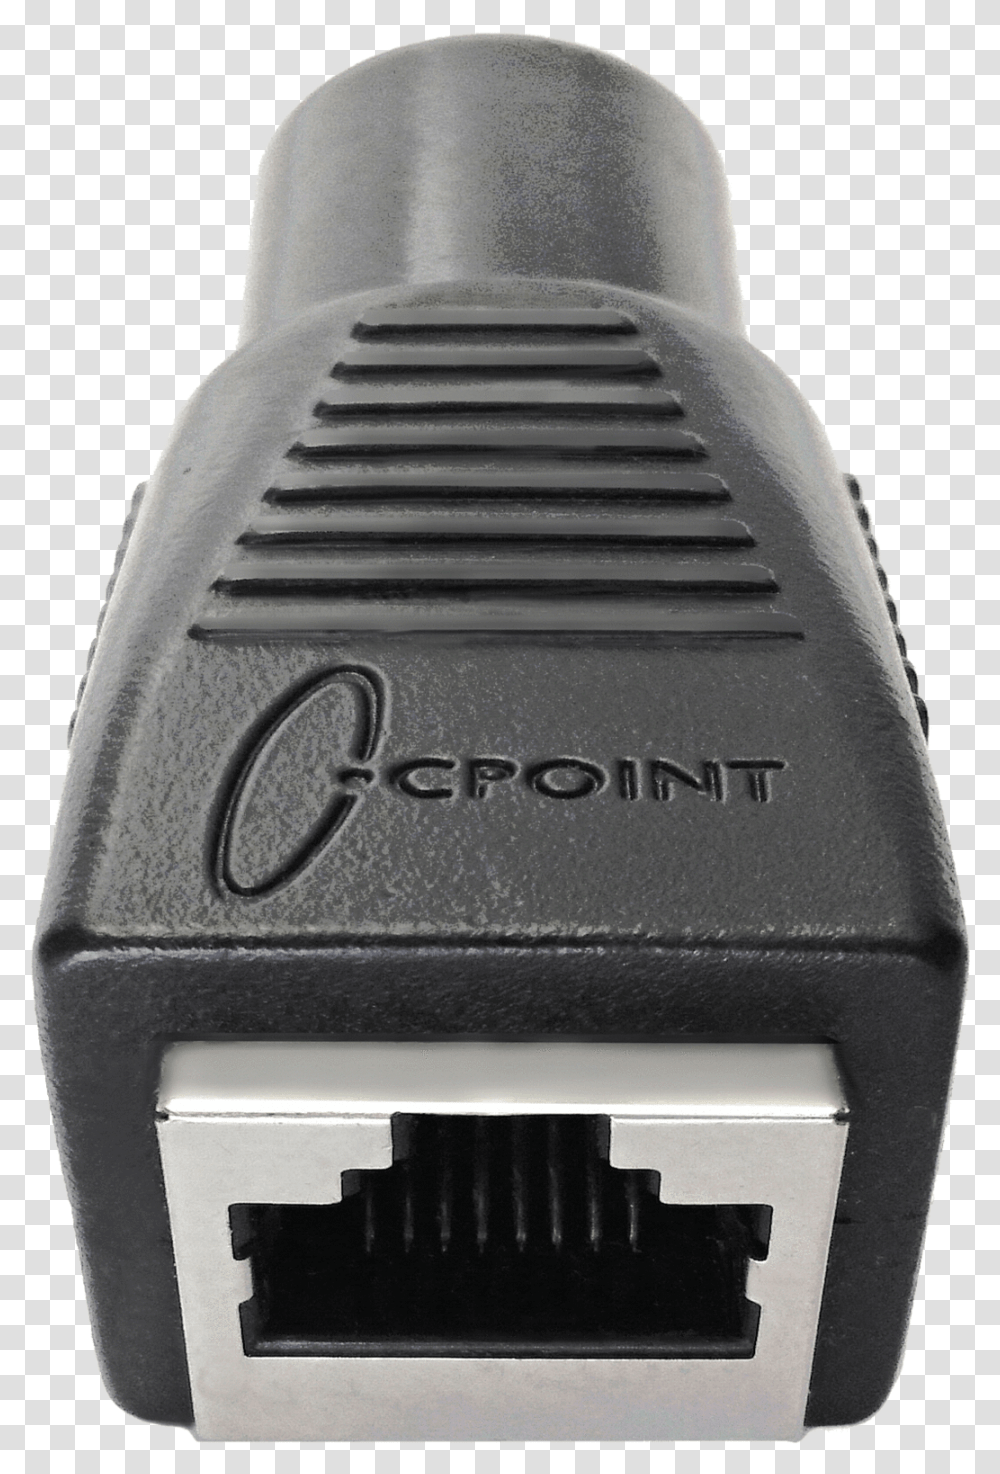 C Point Xlrj45 5 Pin Dmx To Rj45 AdapterClass, Mailbox, Letterbox, Electronics, Plug Transparent Png